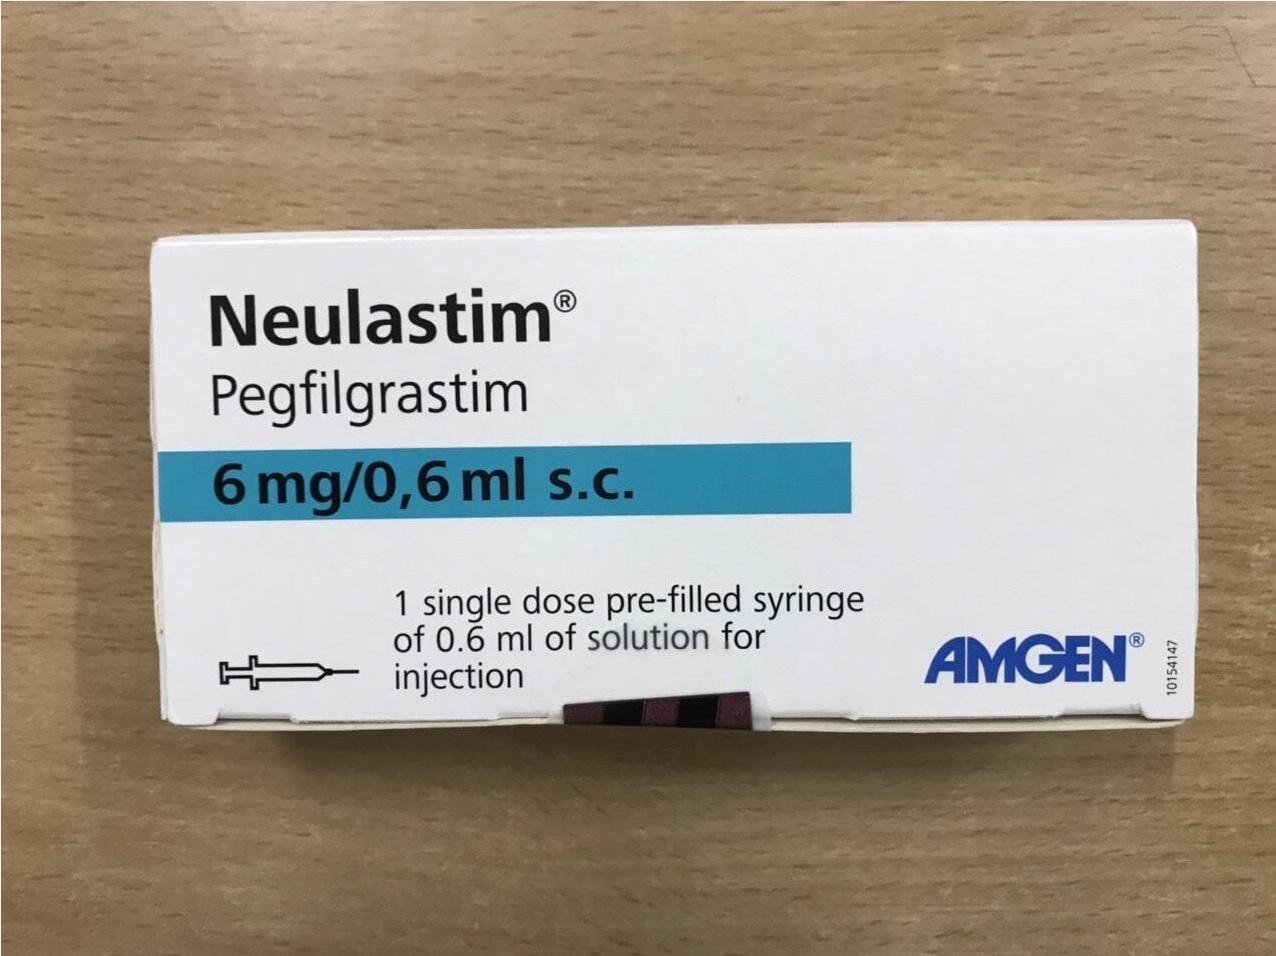 Thuốc Neulastim pegfilgrastim giá bao nhiêu mua ở đâu?